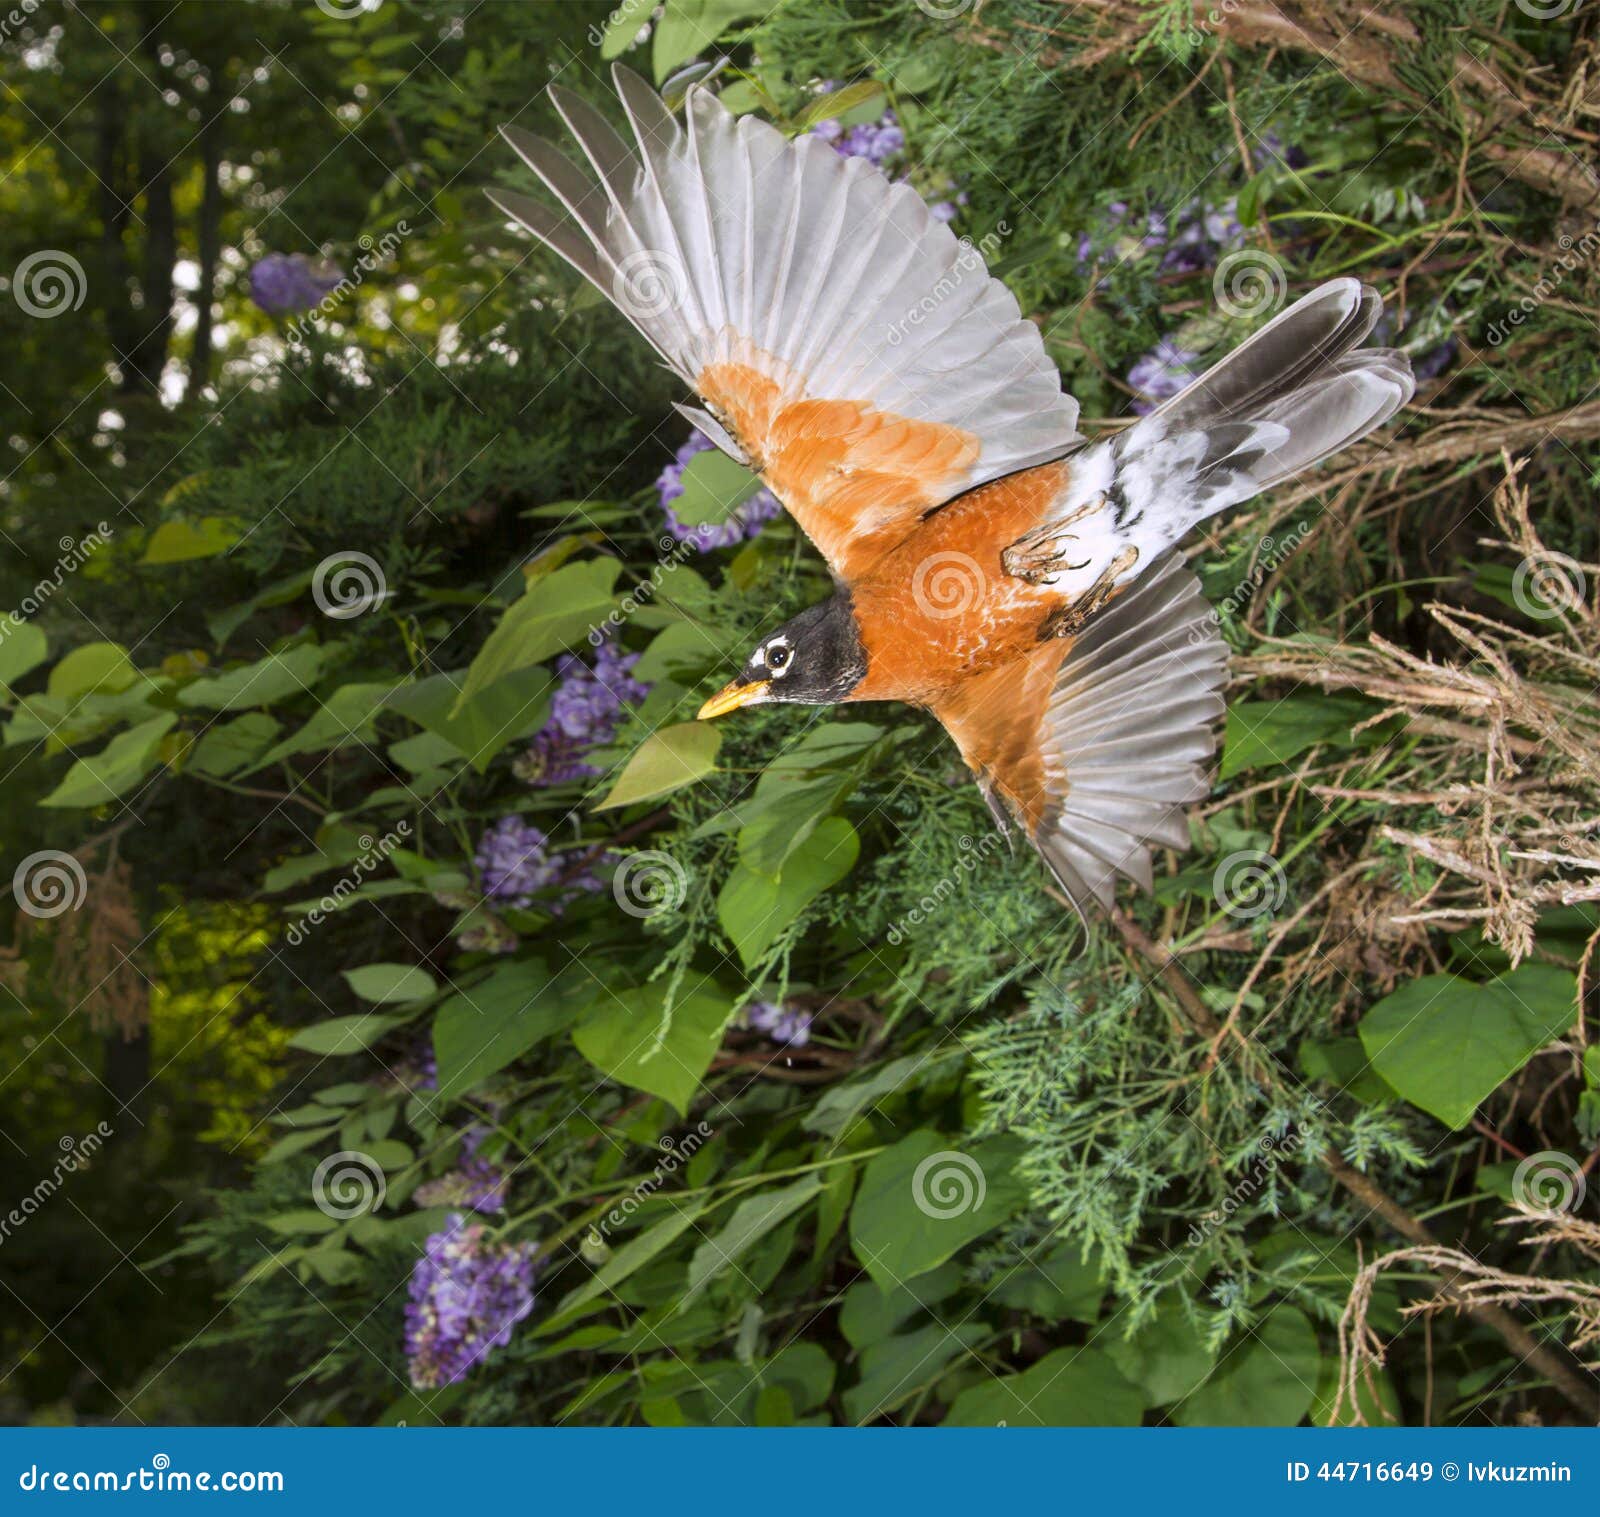 american robin (turdus migratorius) flying.